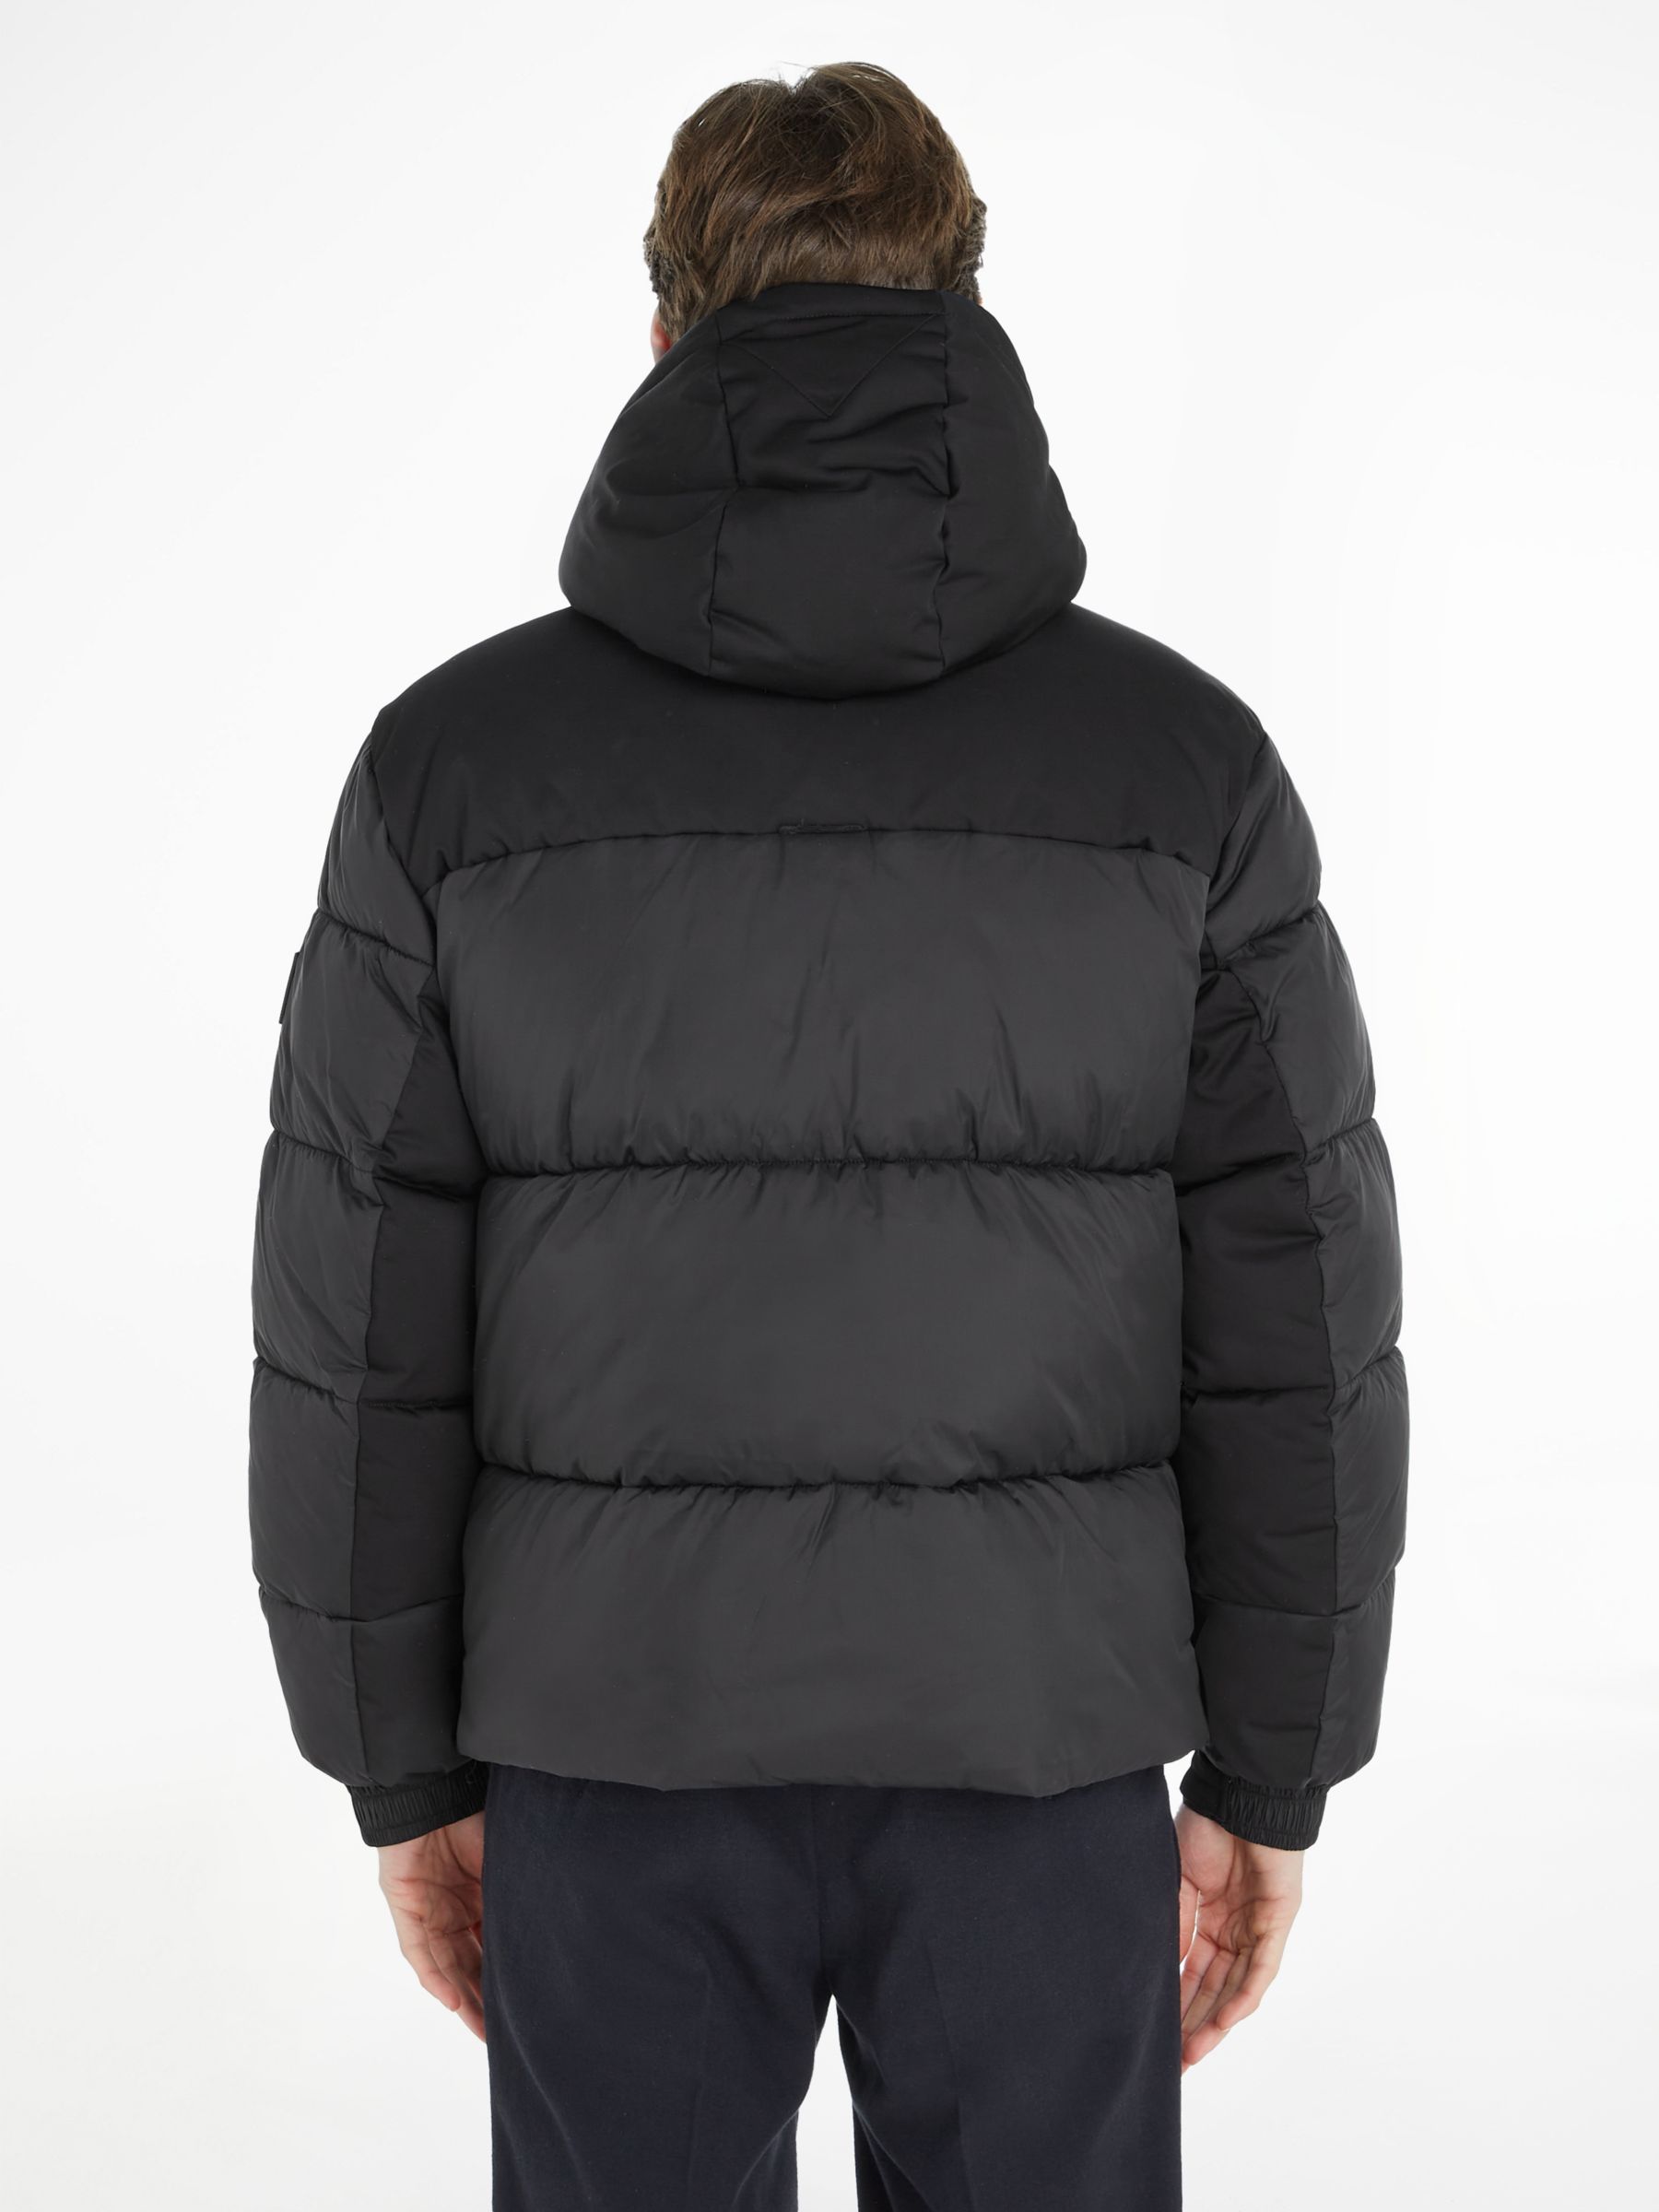 Tommy Hilfiger New York Hooded Jacket, Black at John Lewis & Partners